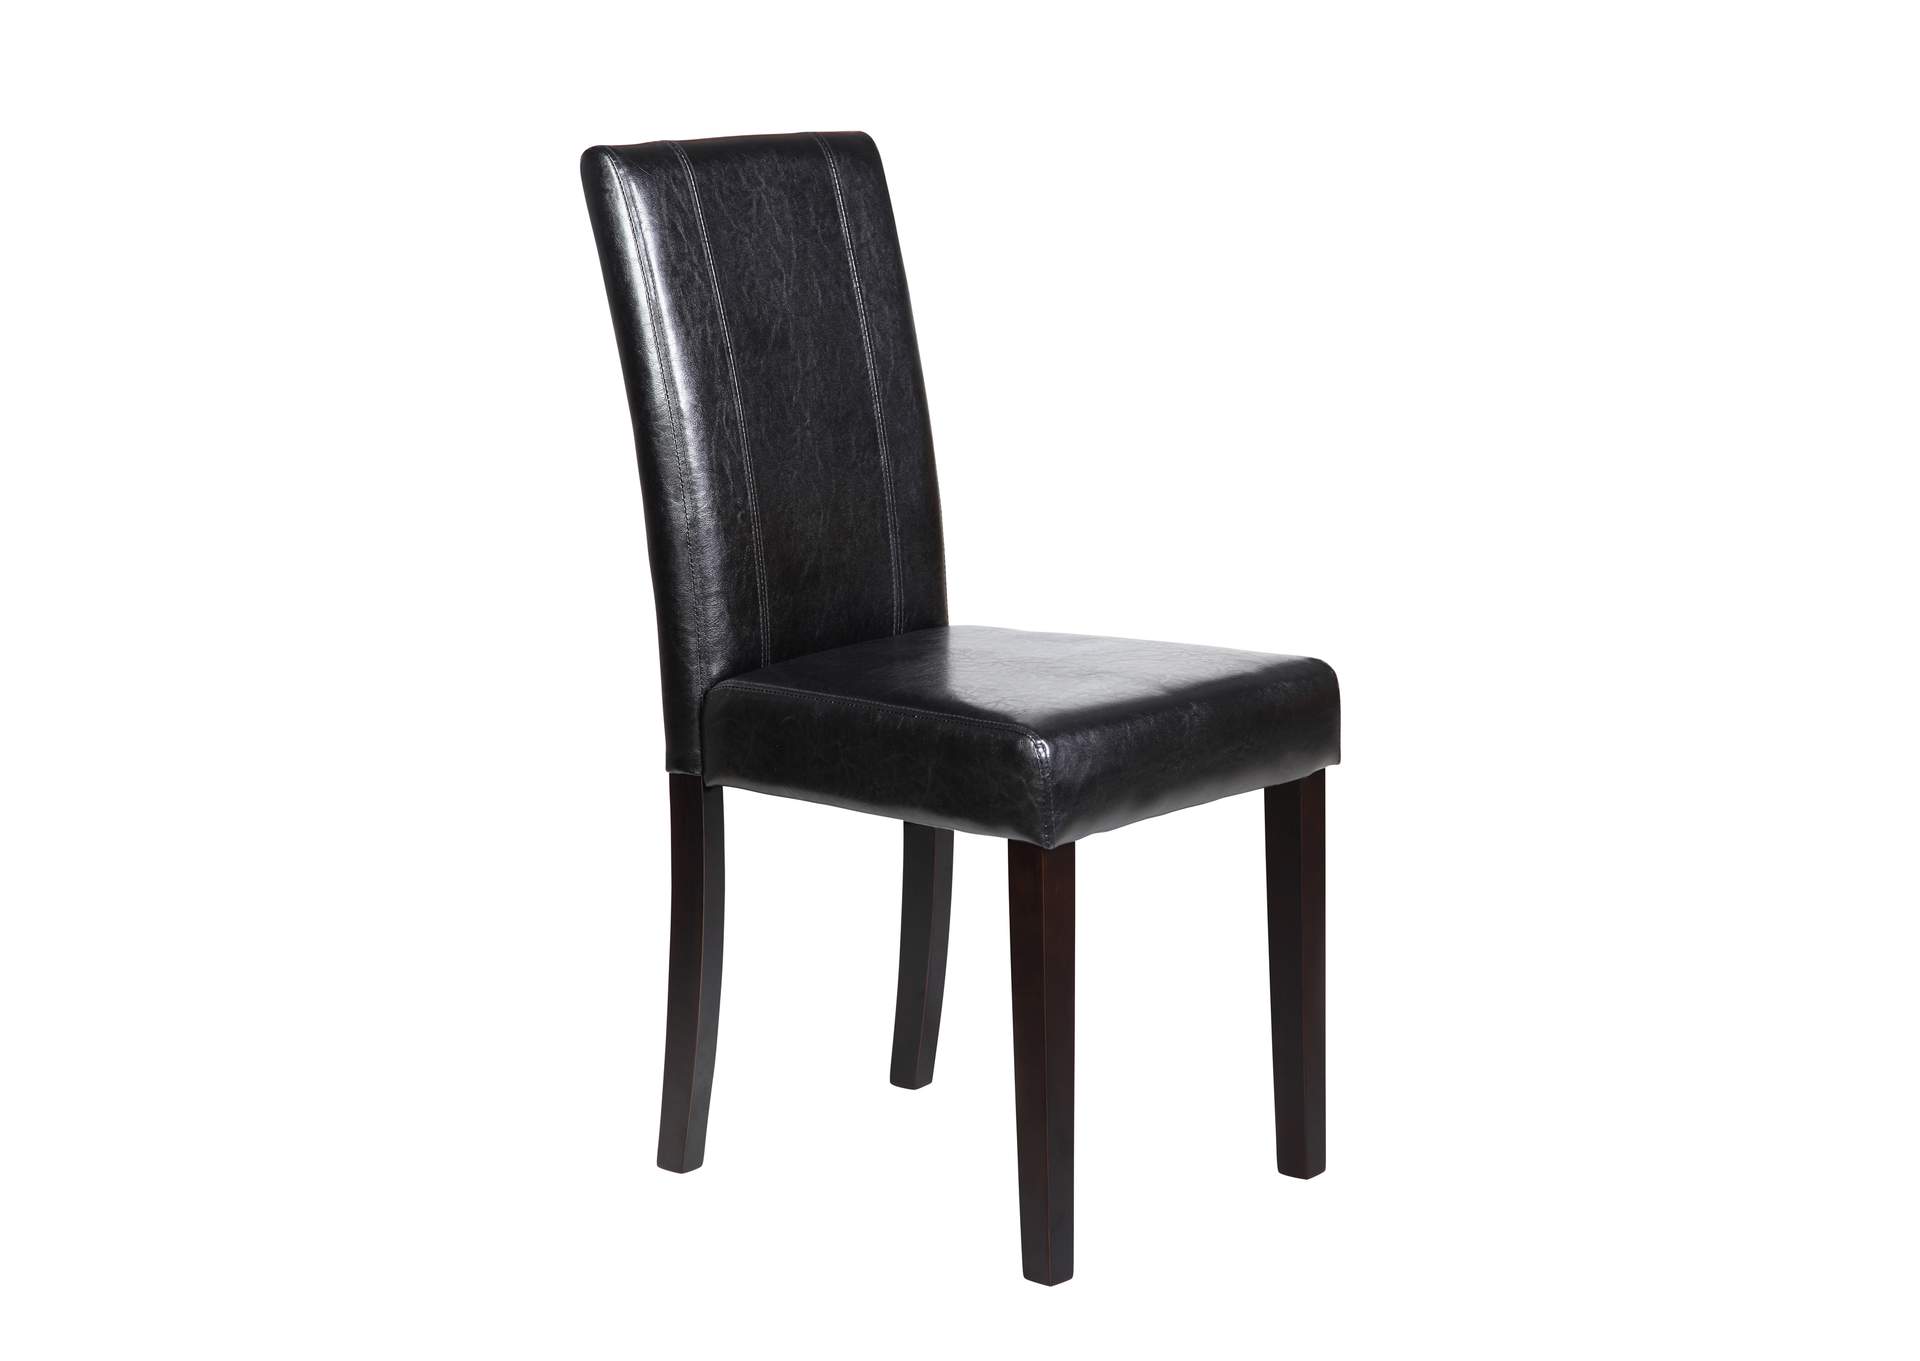 3210 Black Parson Chair 2 In 1 Box,Global Trading